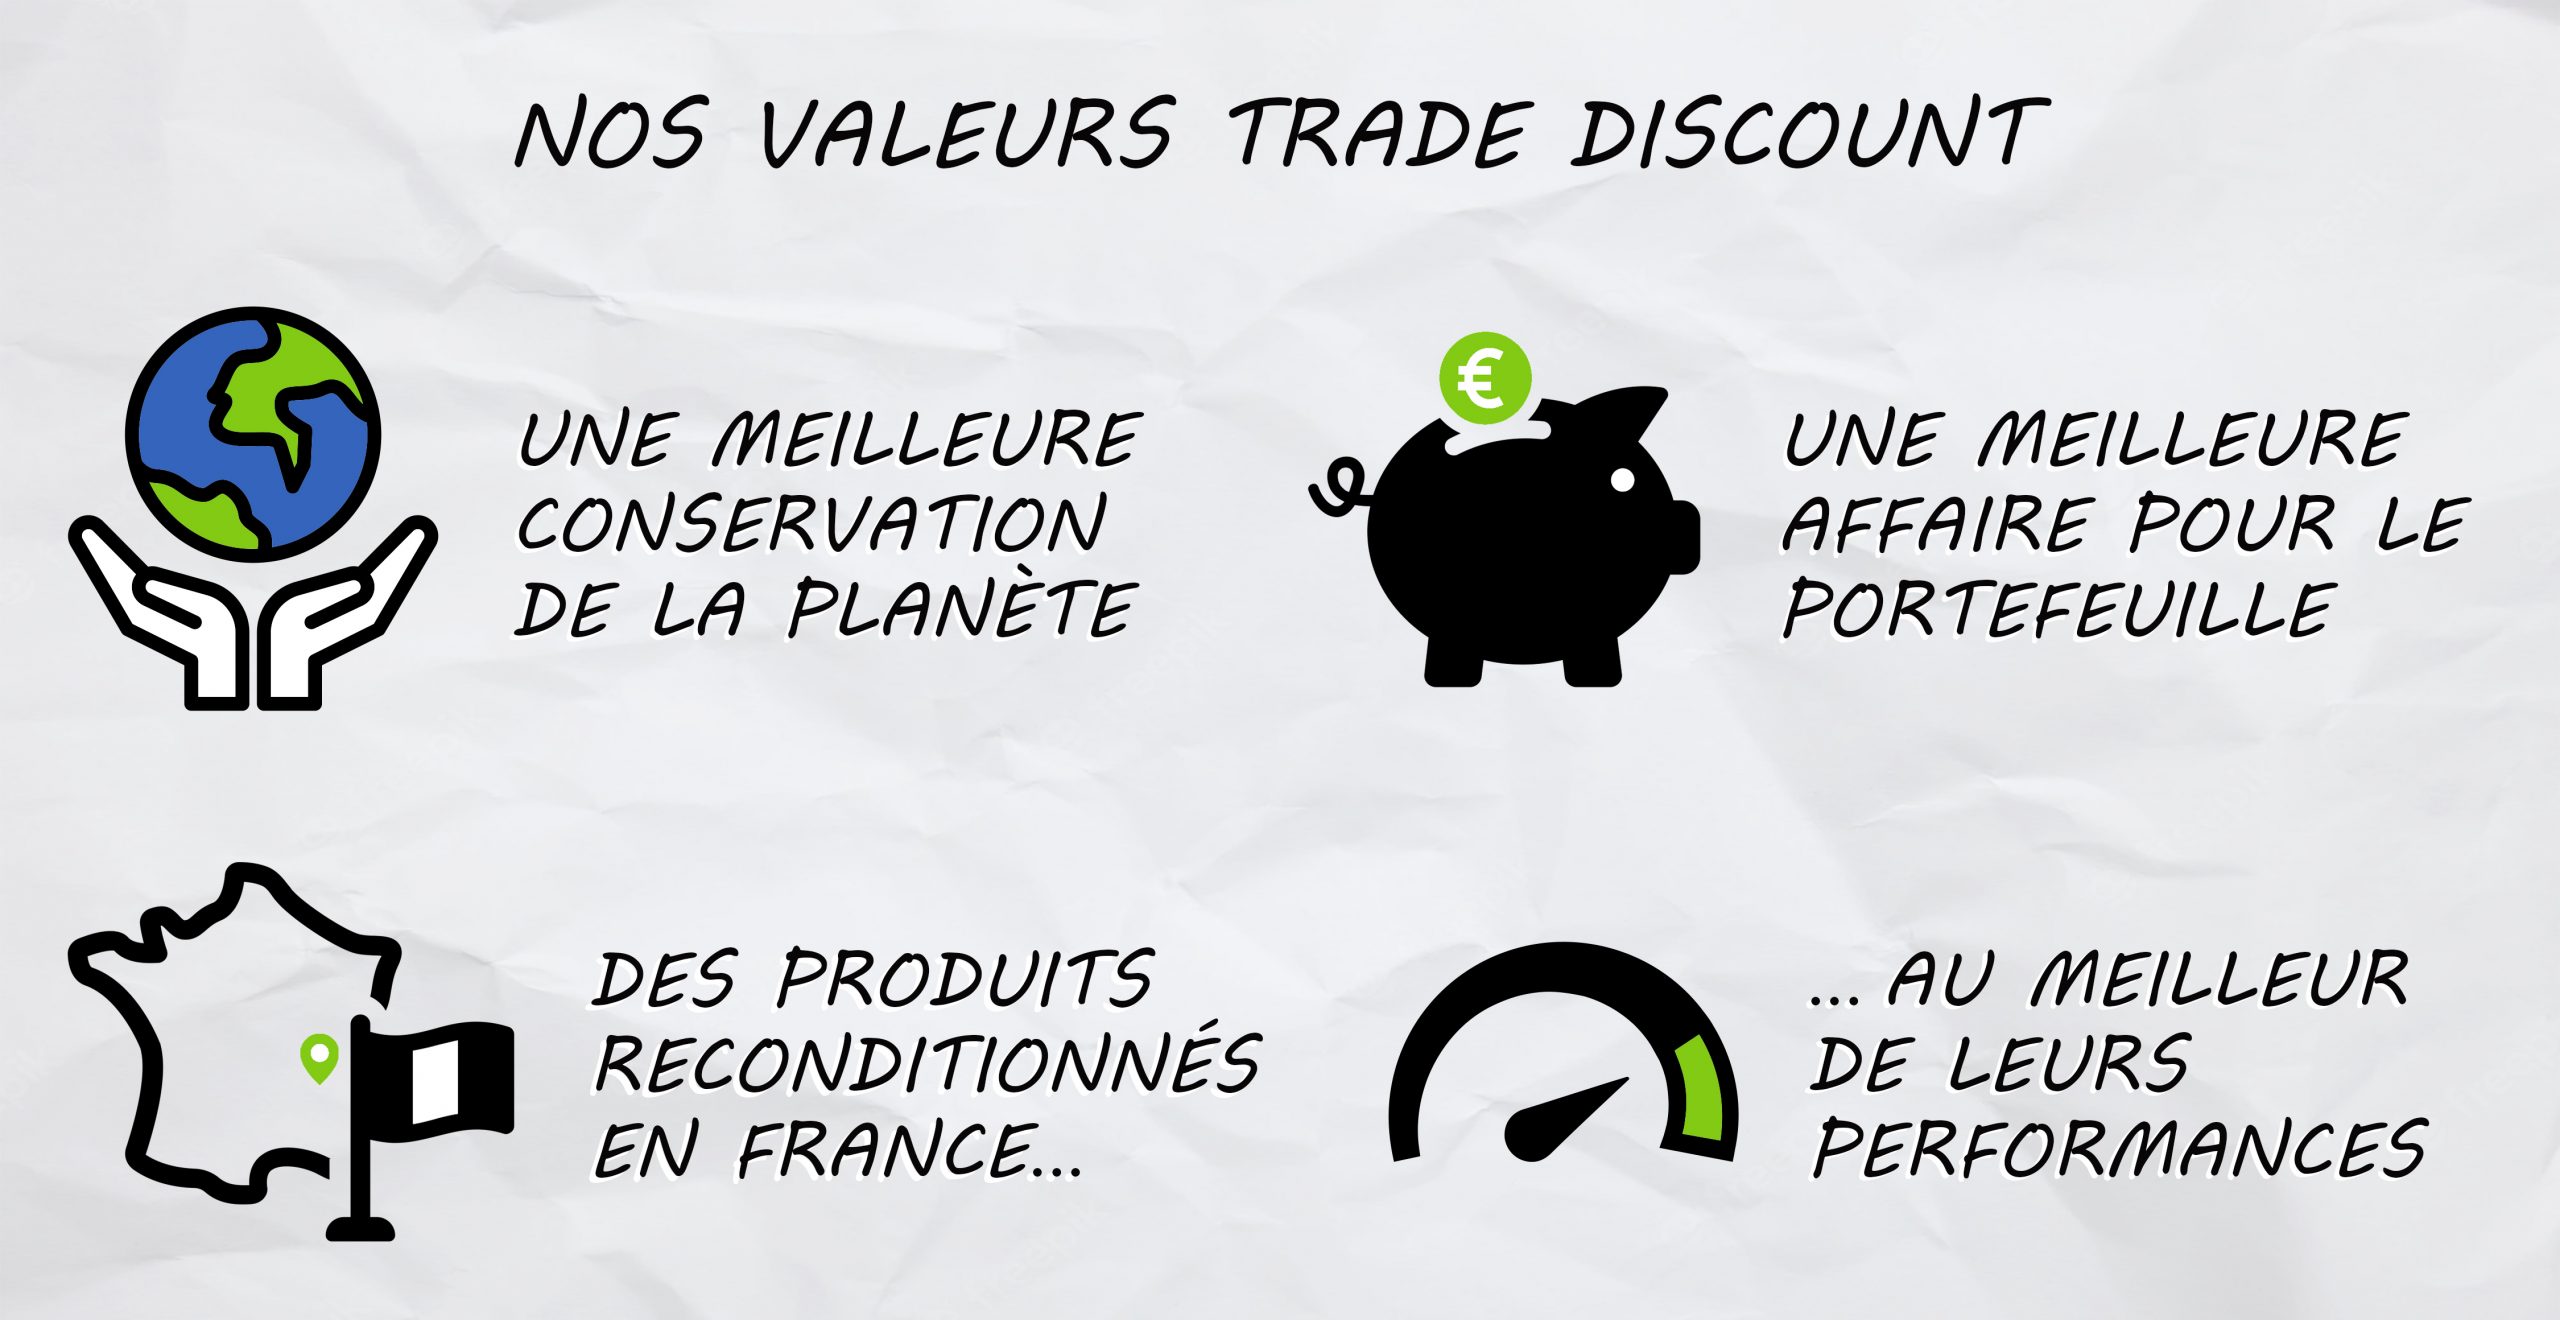 Infographie valeurs Trade Discount